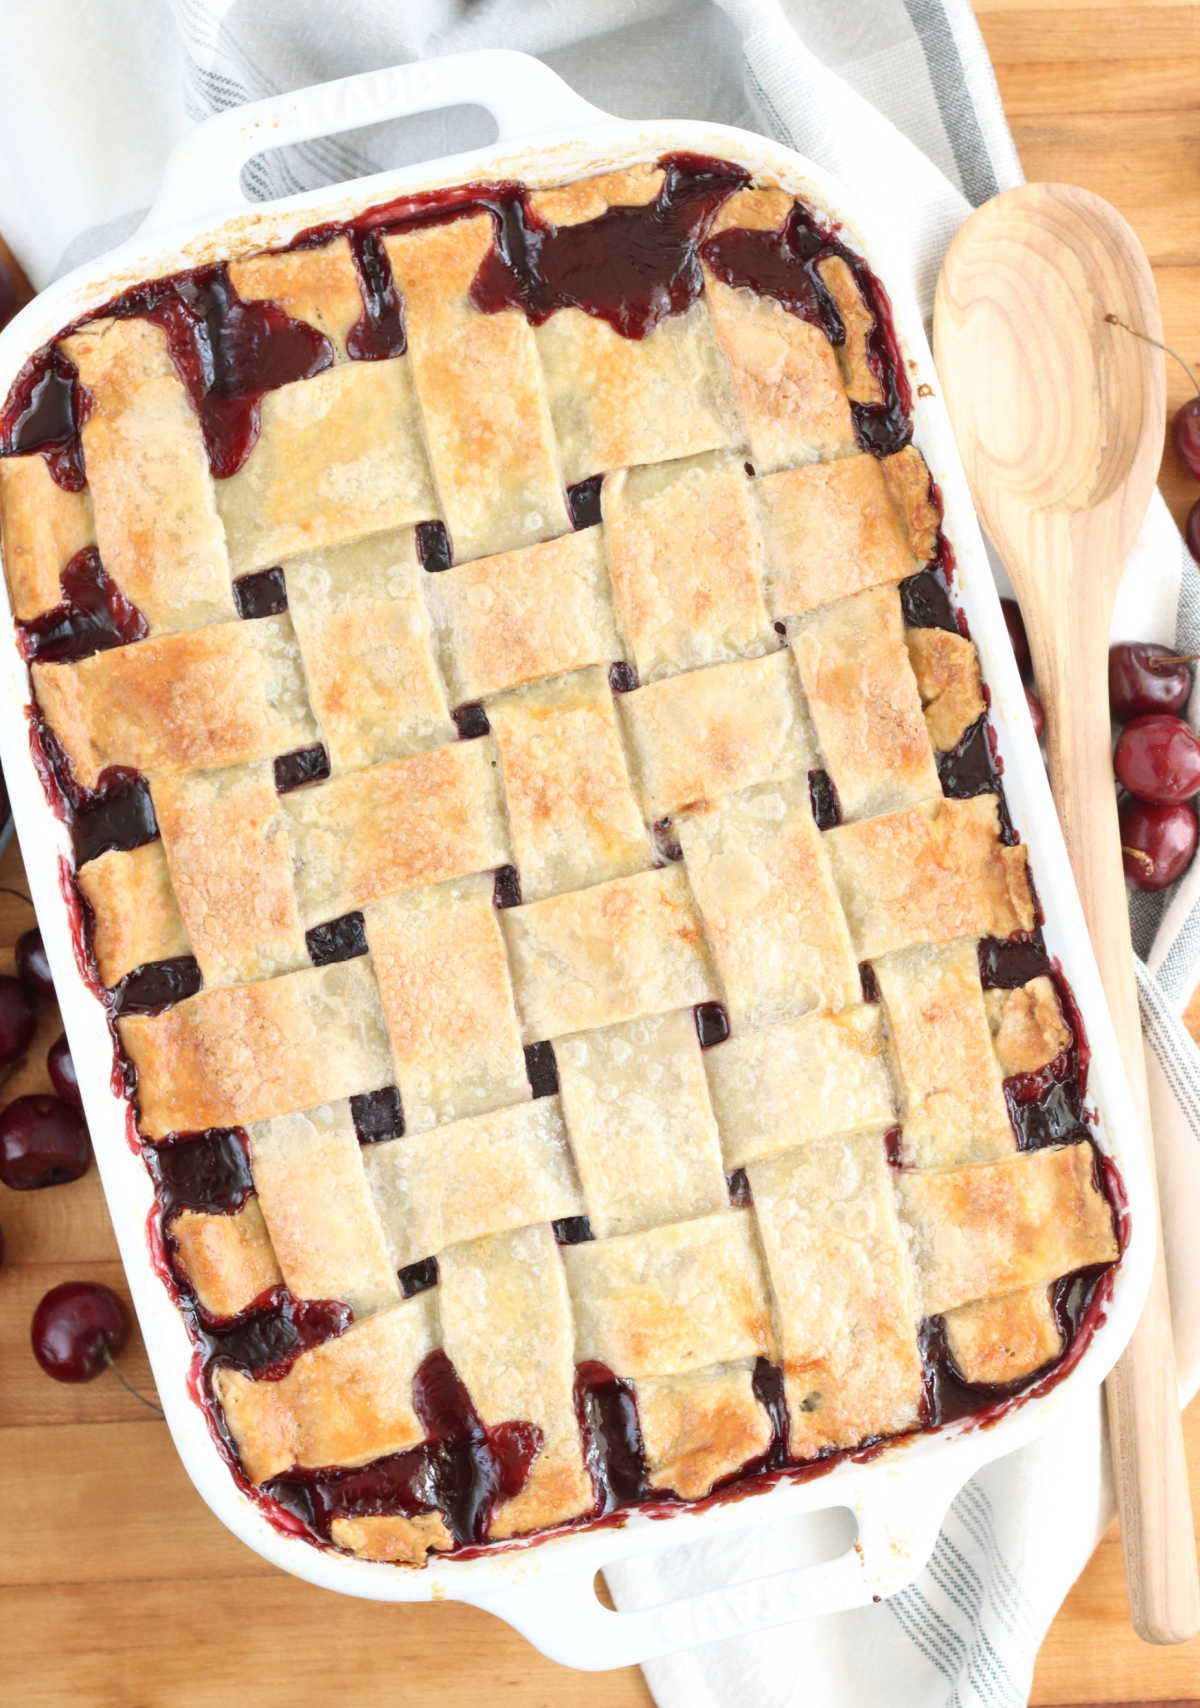 Cherry cobbler lattice pie crust in white rectangle baking dish on wooden cutting board, fresh cherries around.